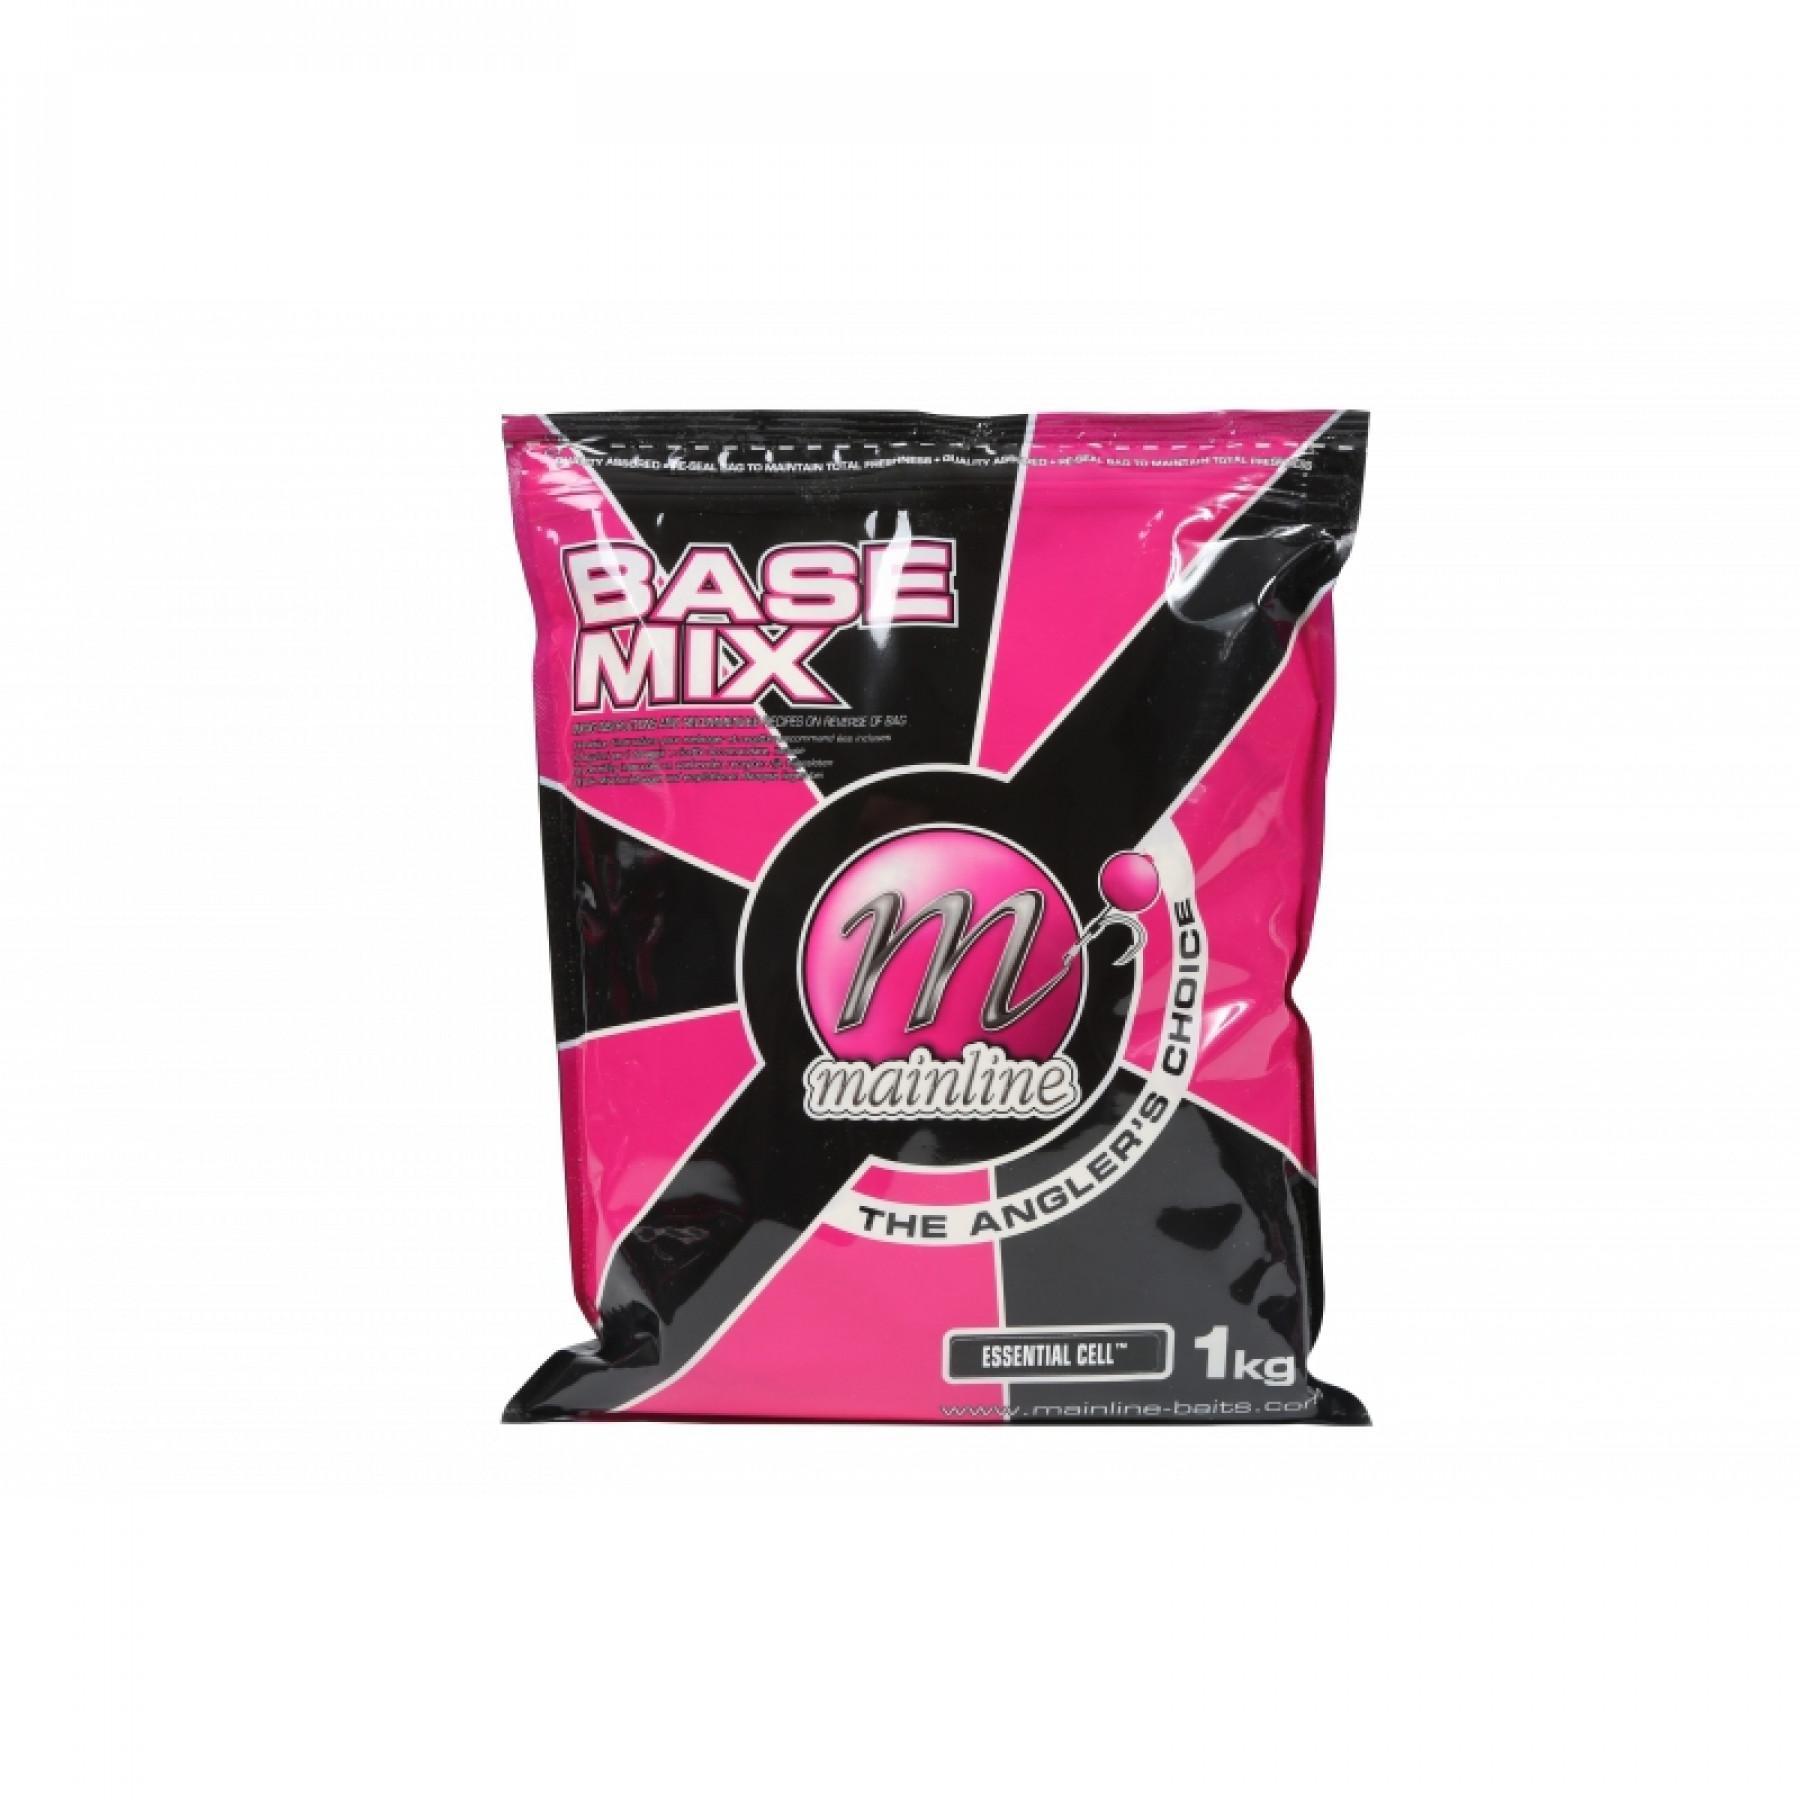 Base mix Mainline Essential Cell 1kg